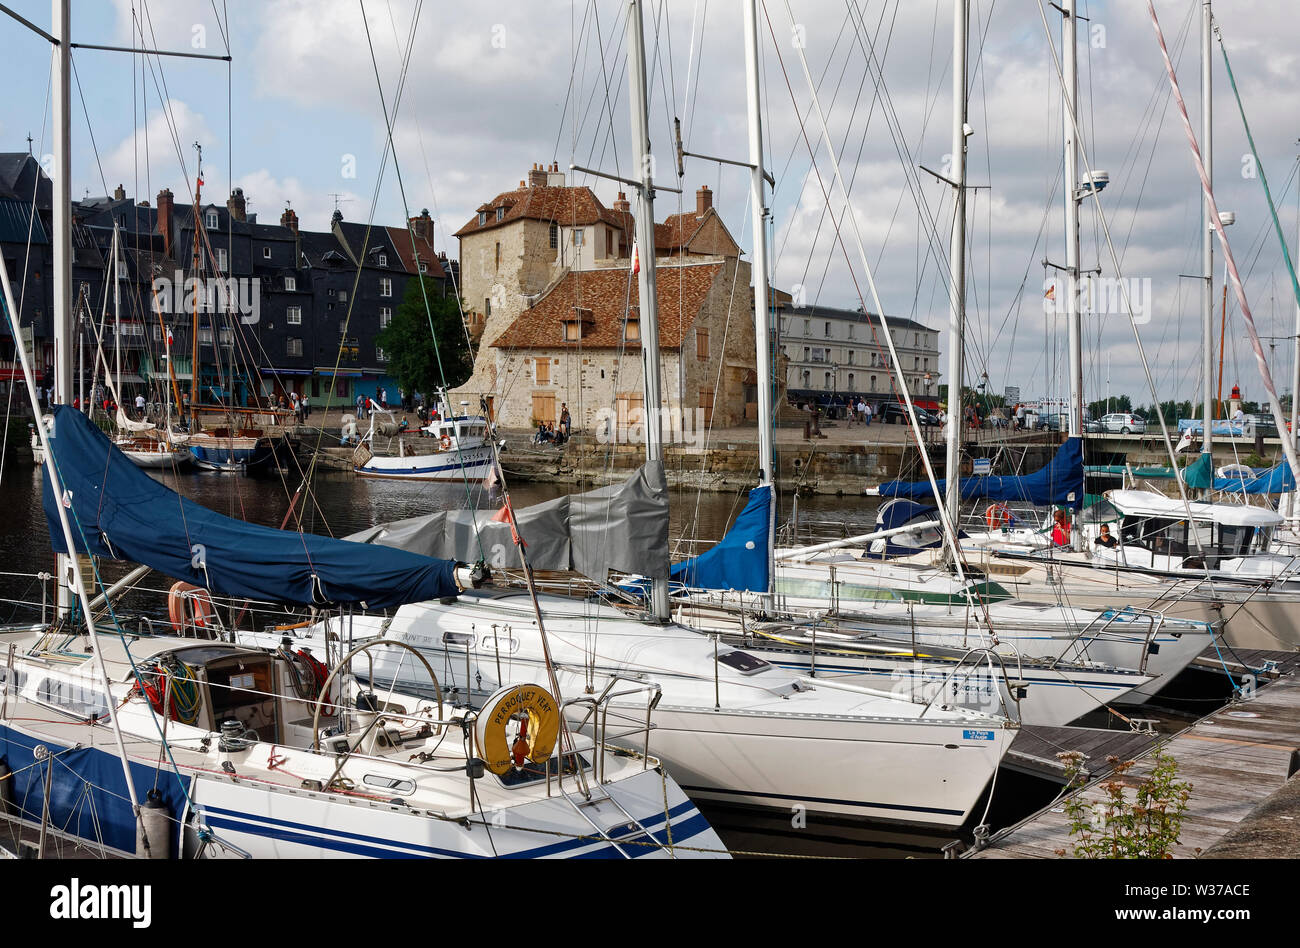 Vieux Bassin; harbor; sailboats docked, The Lieutenancy, 14 century restored, old stone buildings, cityscape, Europe, Normandy; Honfleur; France; summ Stock Photo